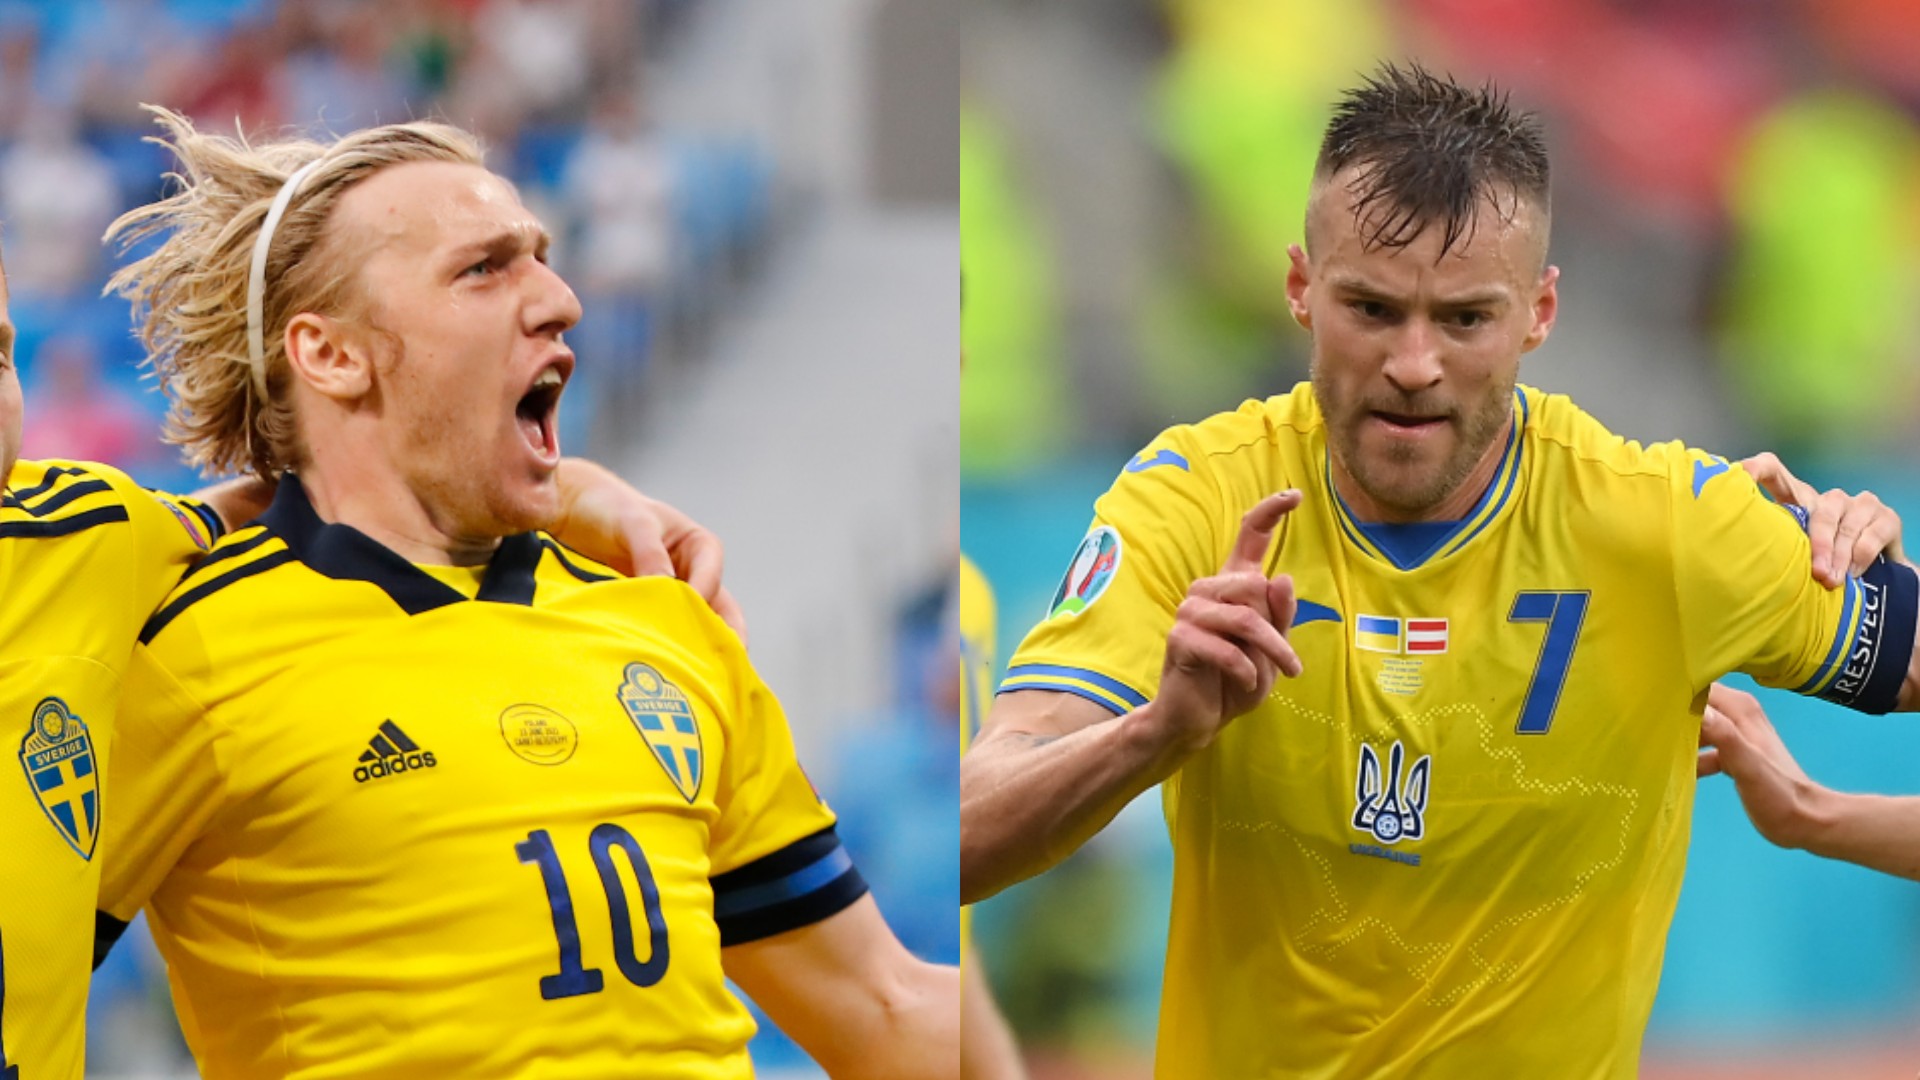 sweden vs ukraine euro 2020